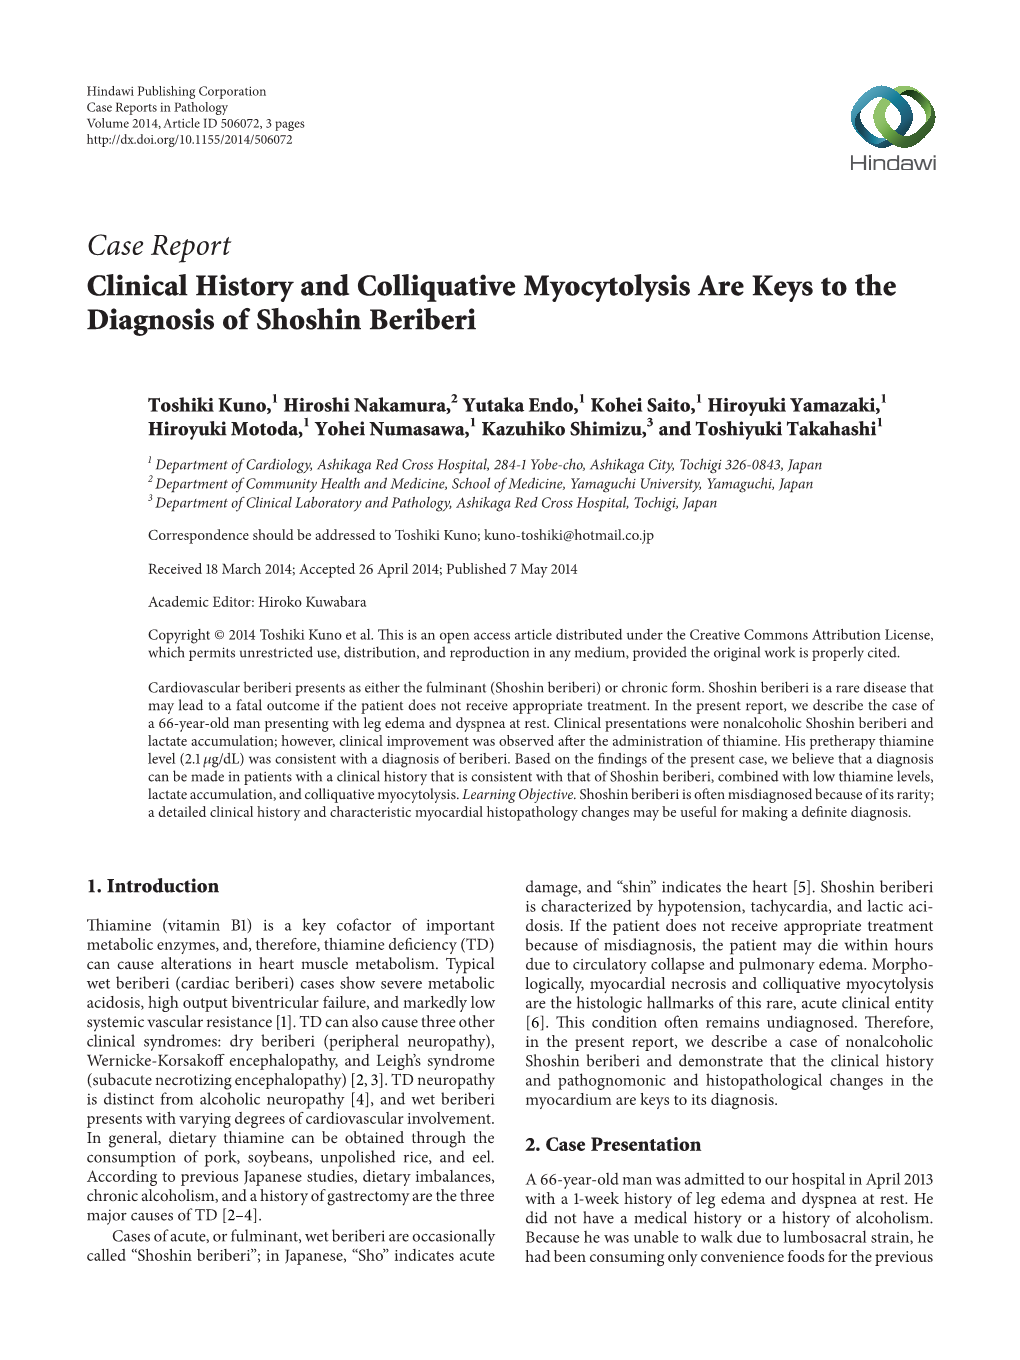 Clinical History and Colliquative Myocytolysis Are Keys to the Diagnosis of Shoshin Beriberi